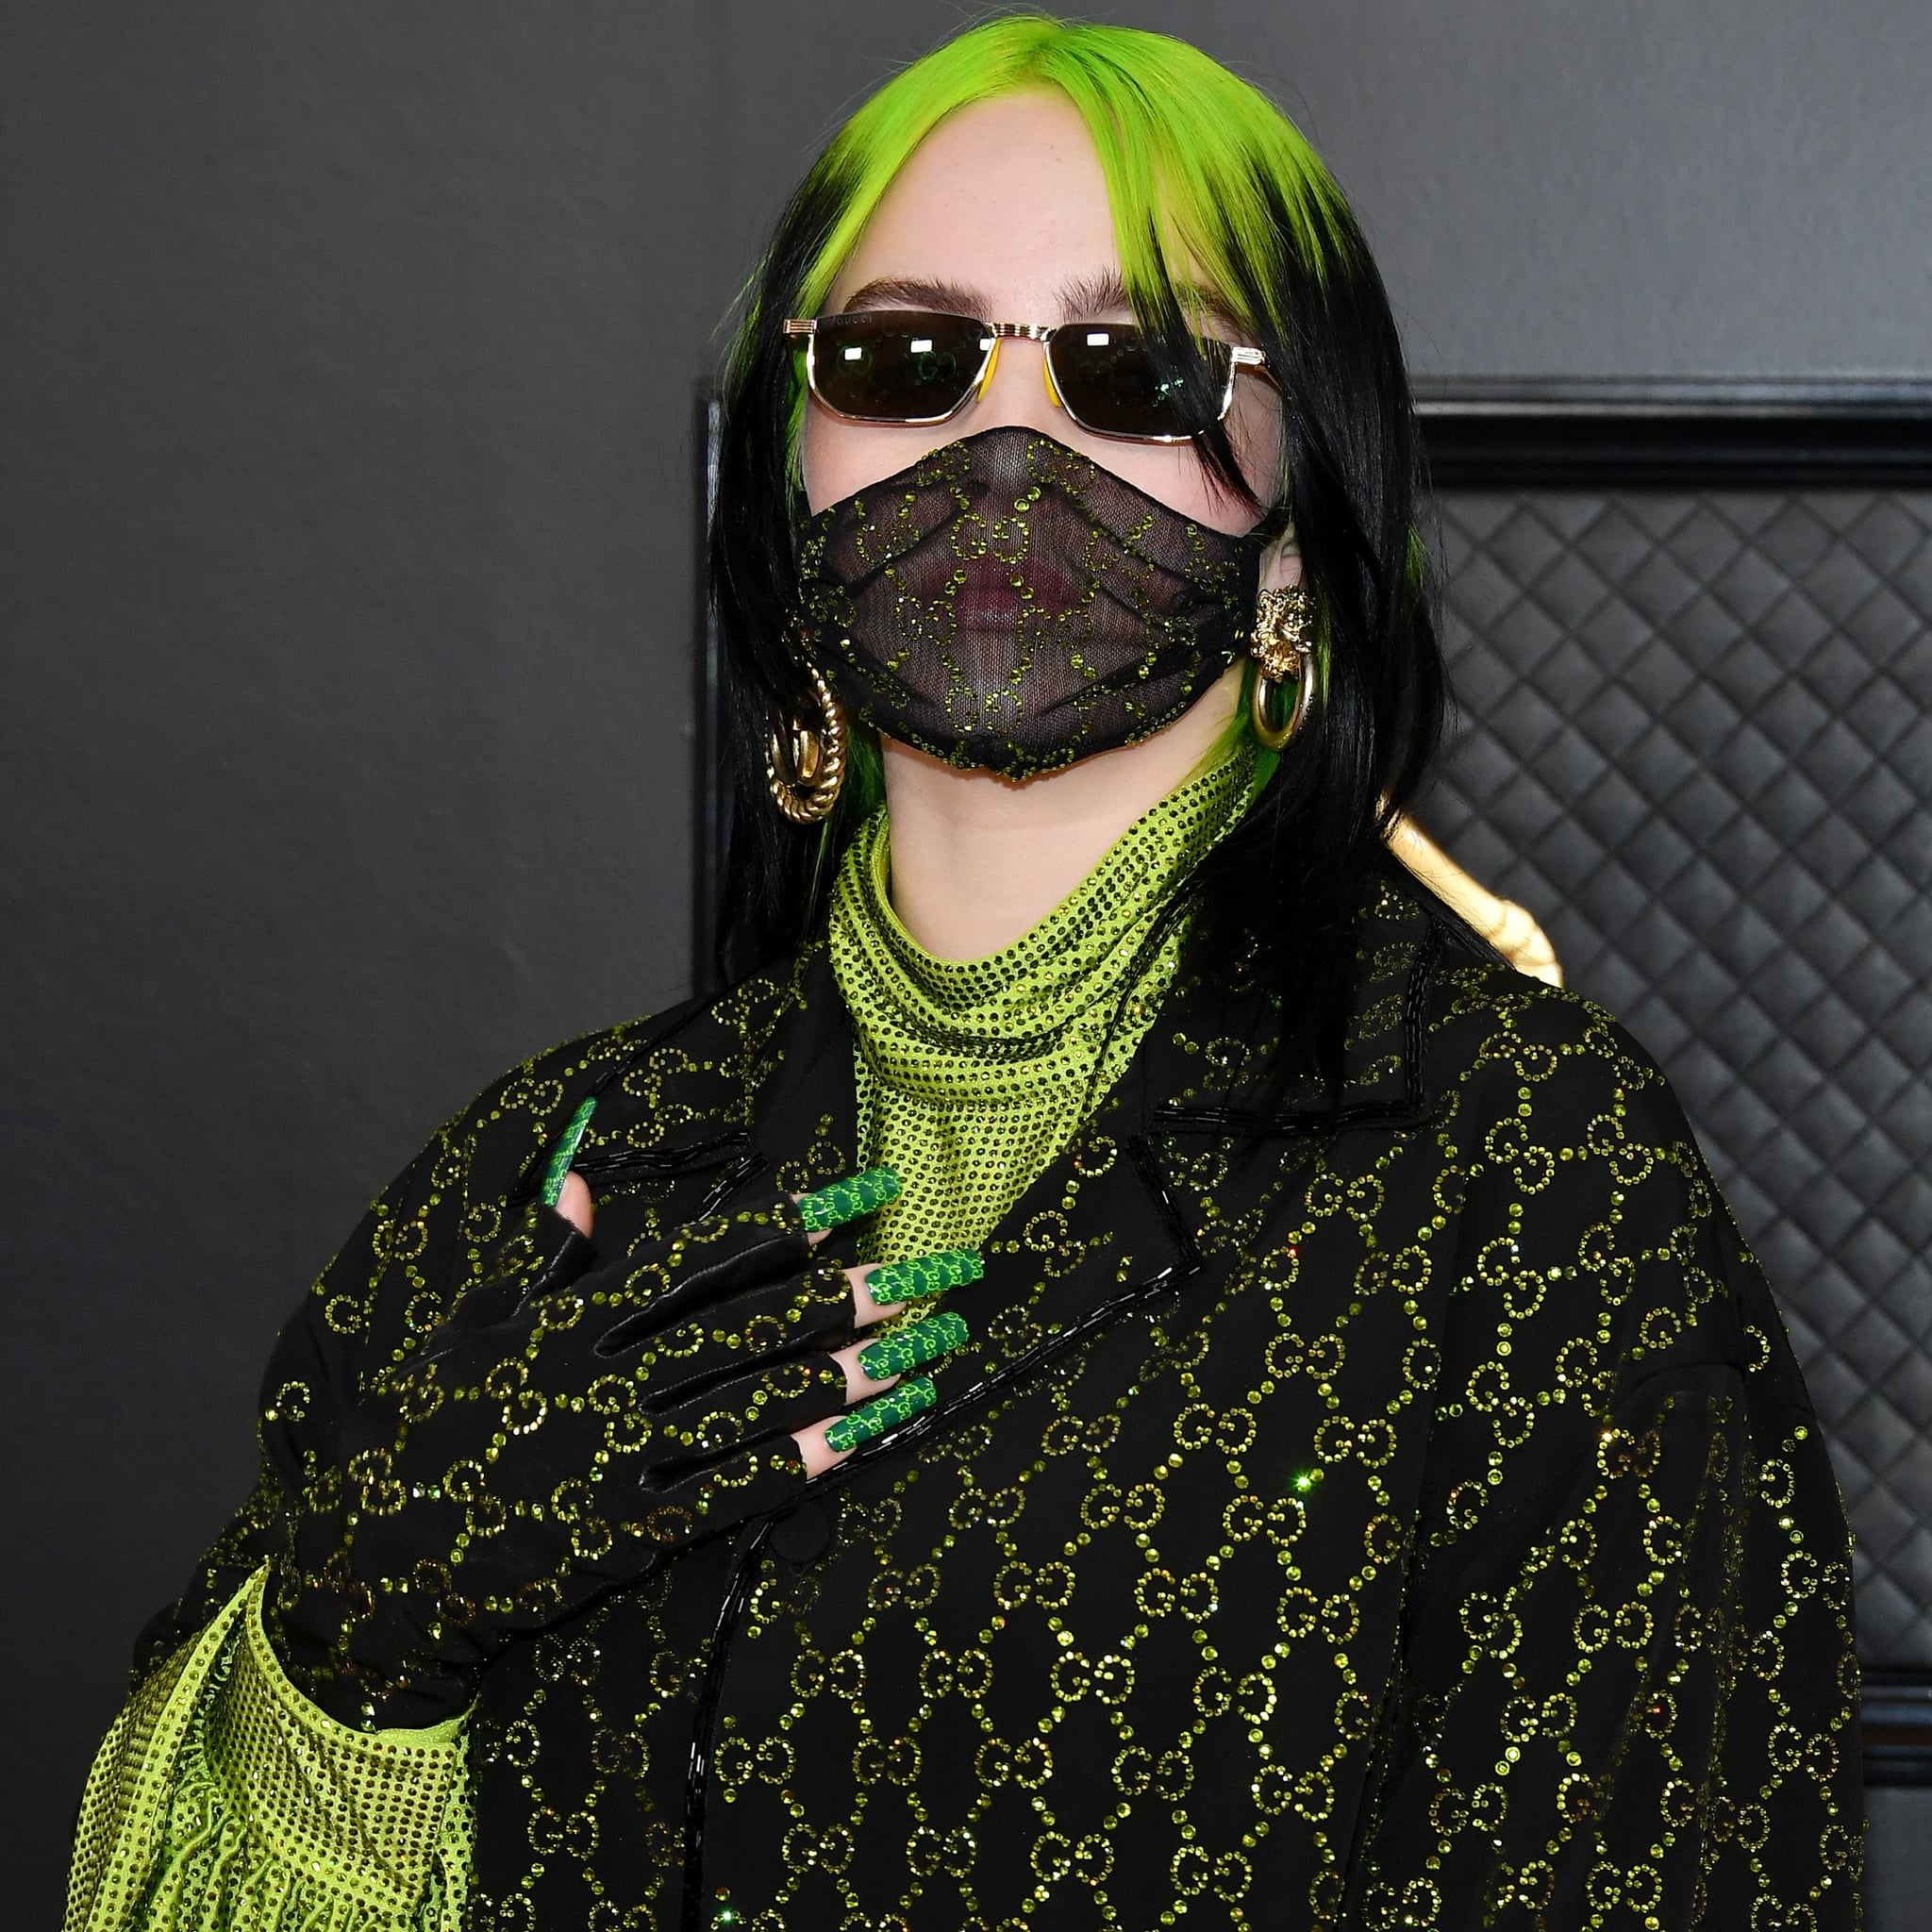 Billie Eilish's Gucci Outfit at the 2020 Grammys | POPSUGAR Fashion